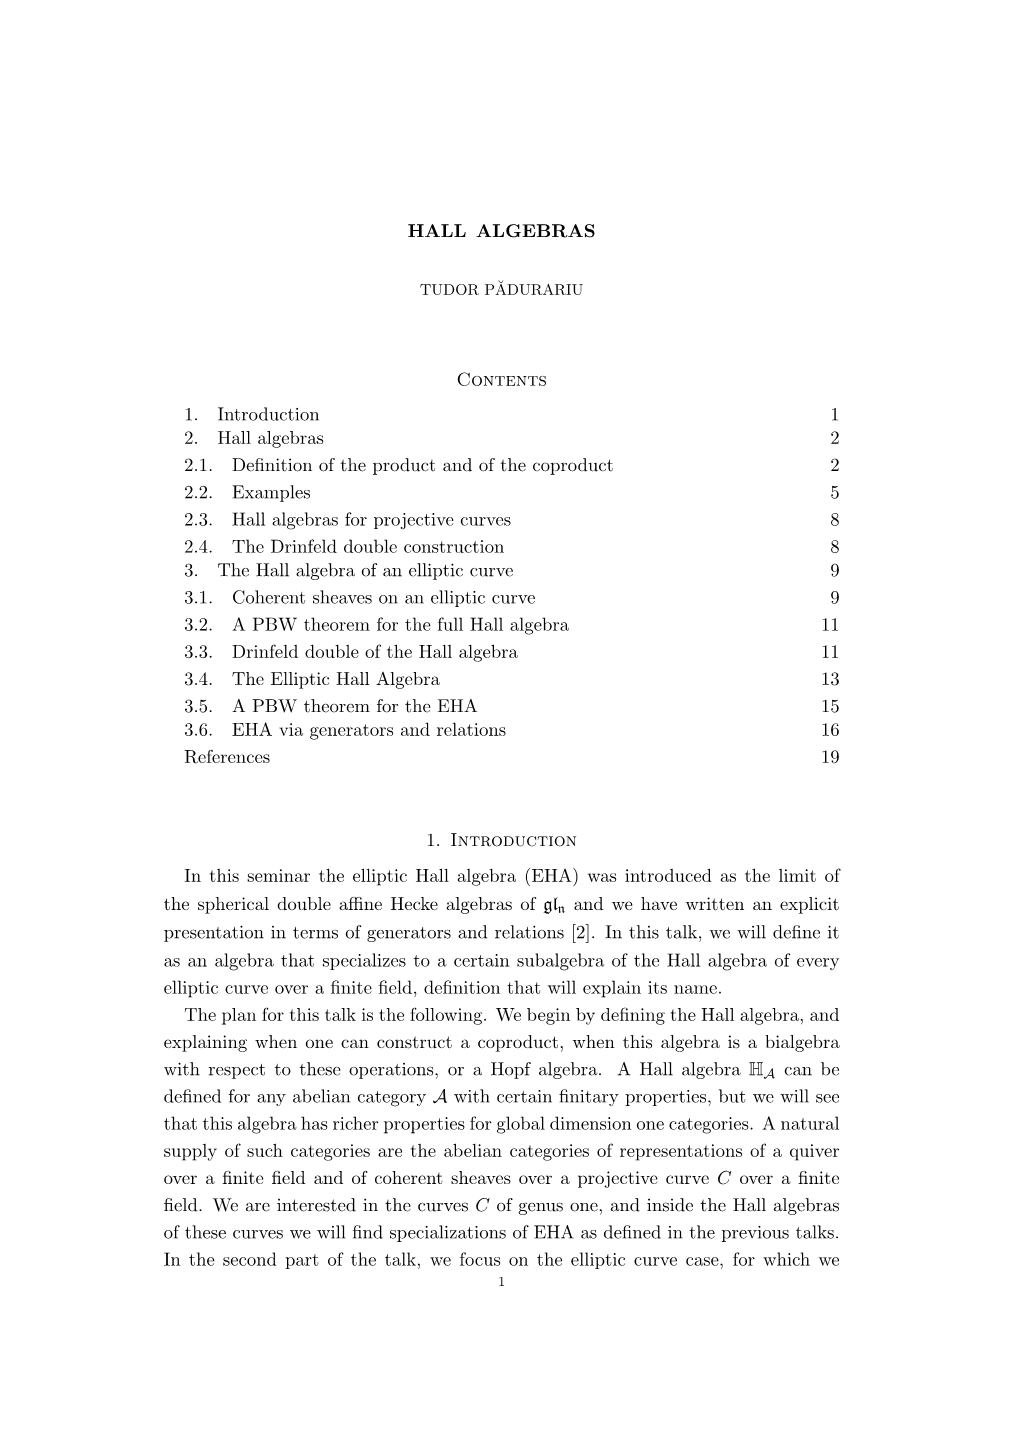 HALL ALGEBRAS Contents 1. Introduction 1 2. Hall Algebras 2 2.1